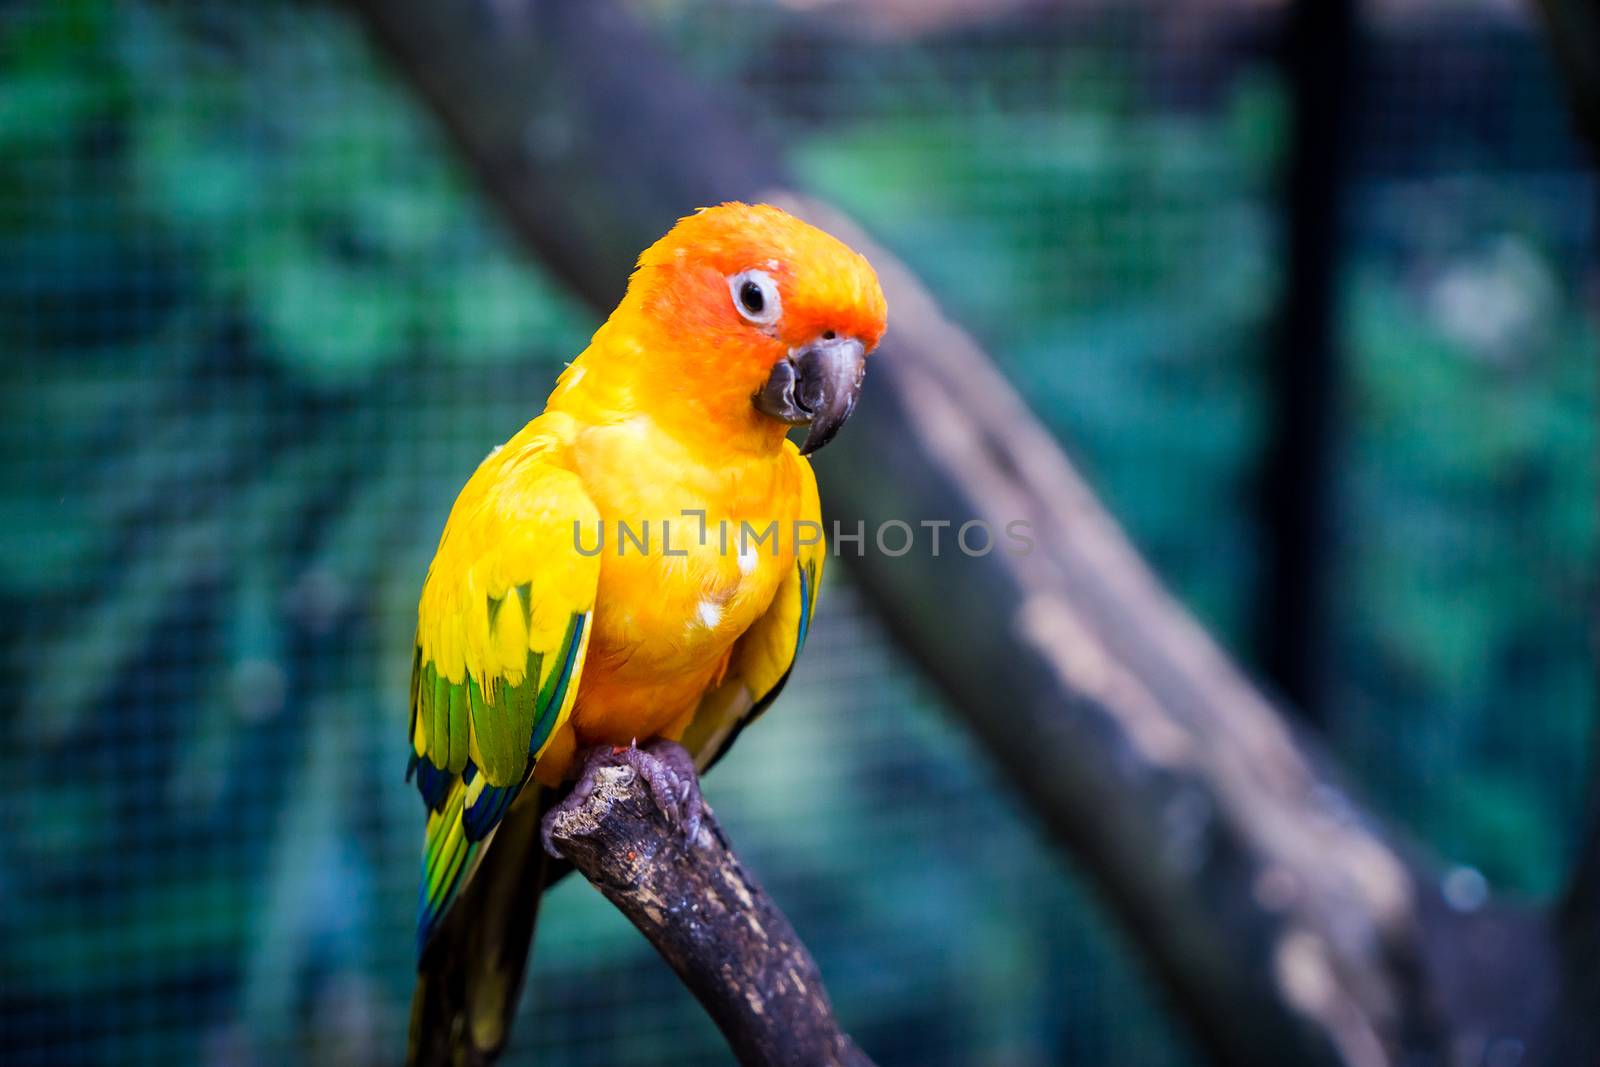 Orange love bird standing on wooden stick by junce